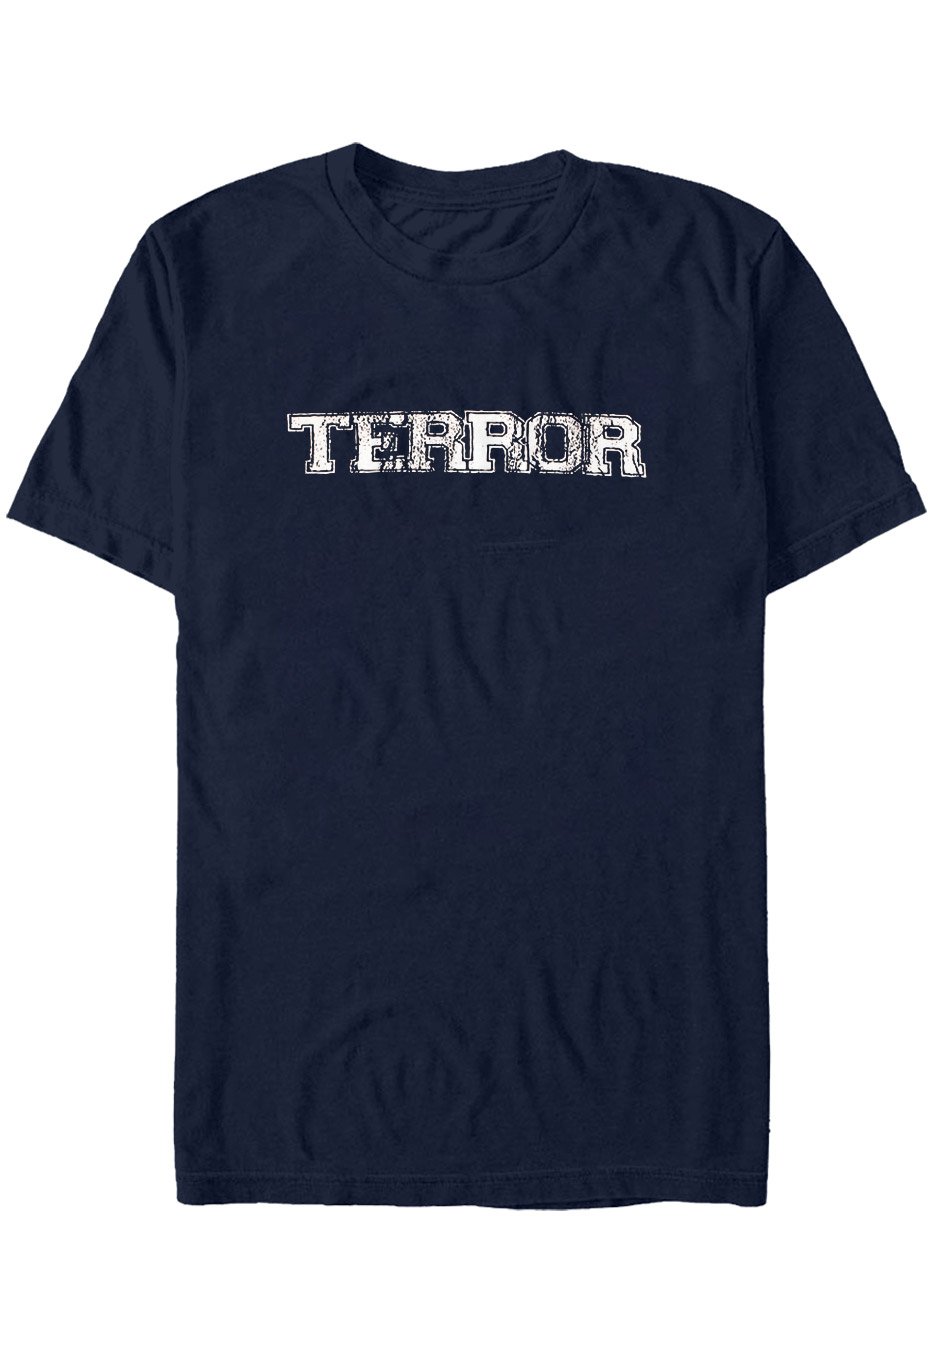 Terror - TWNWM Navy - T-Shirt